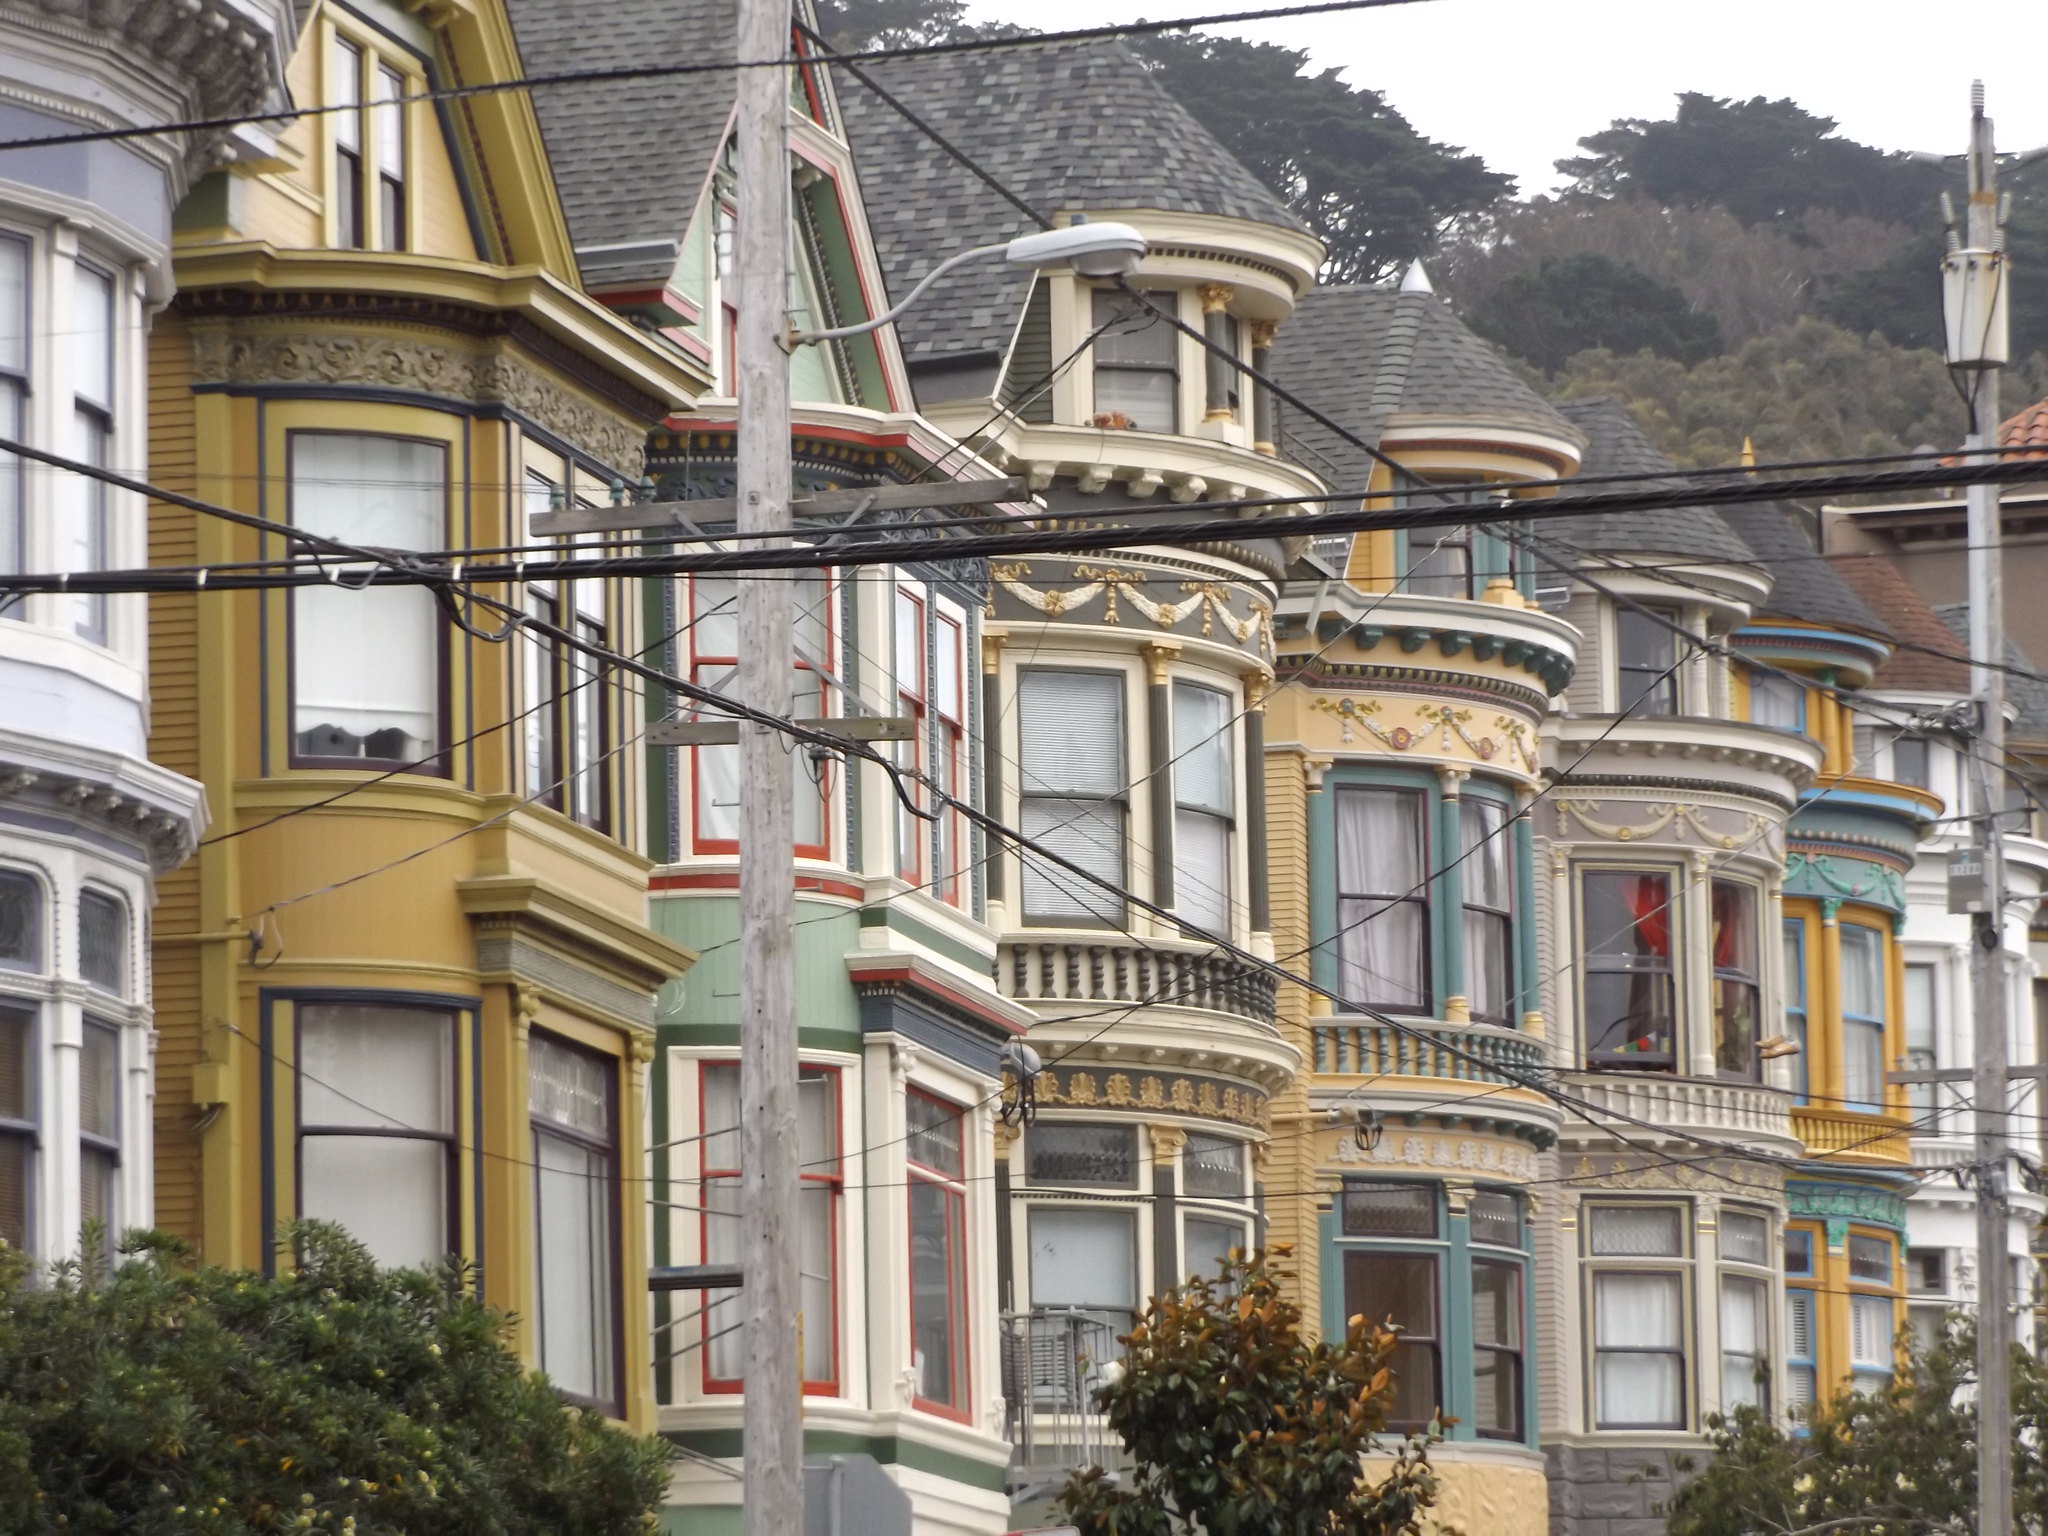 Victorian Houses in Haight-Ashbury District, San Francisco, California, USA, 3 September 2018